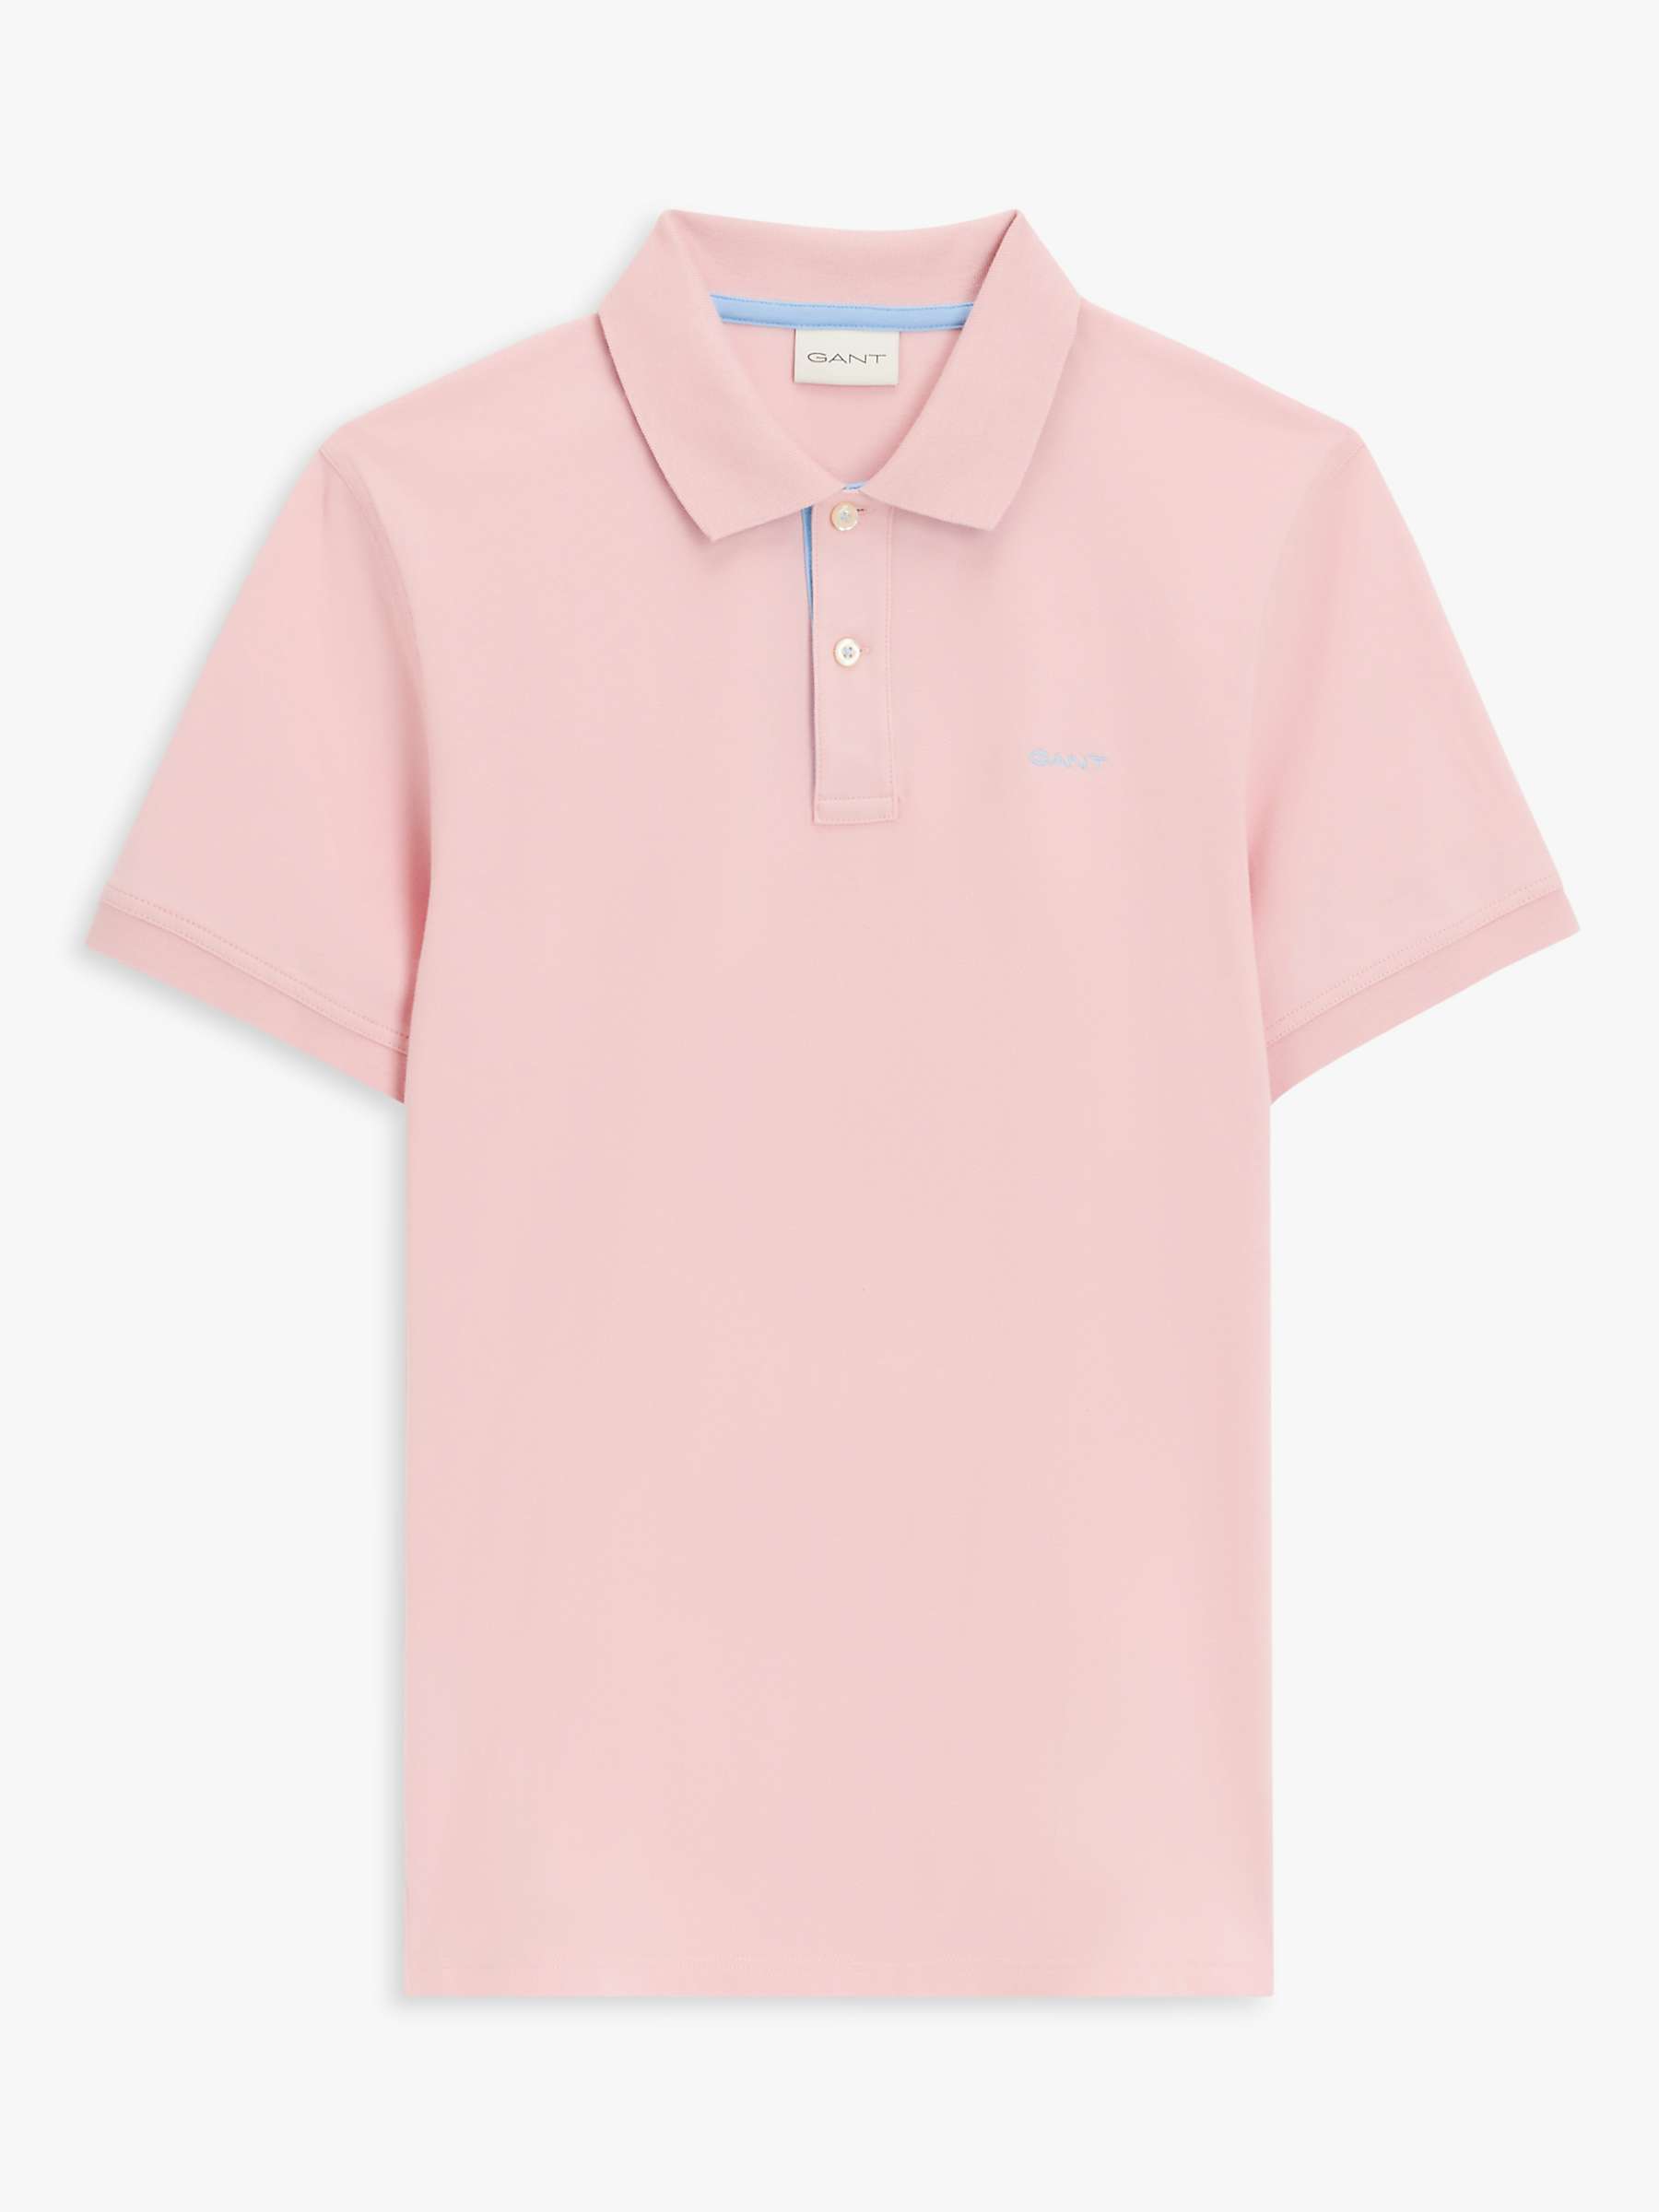 GANT Piqué Textured Short Sleeve Polo Shirt, Faded Pink at John Lewis &  Partners